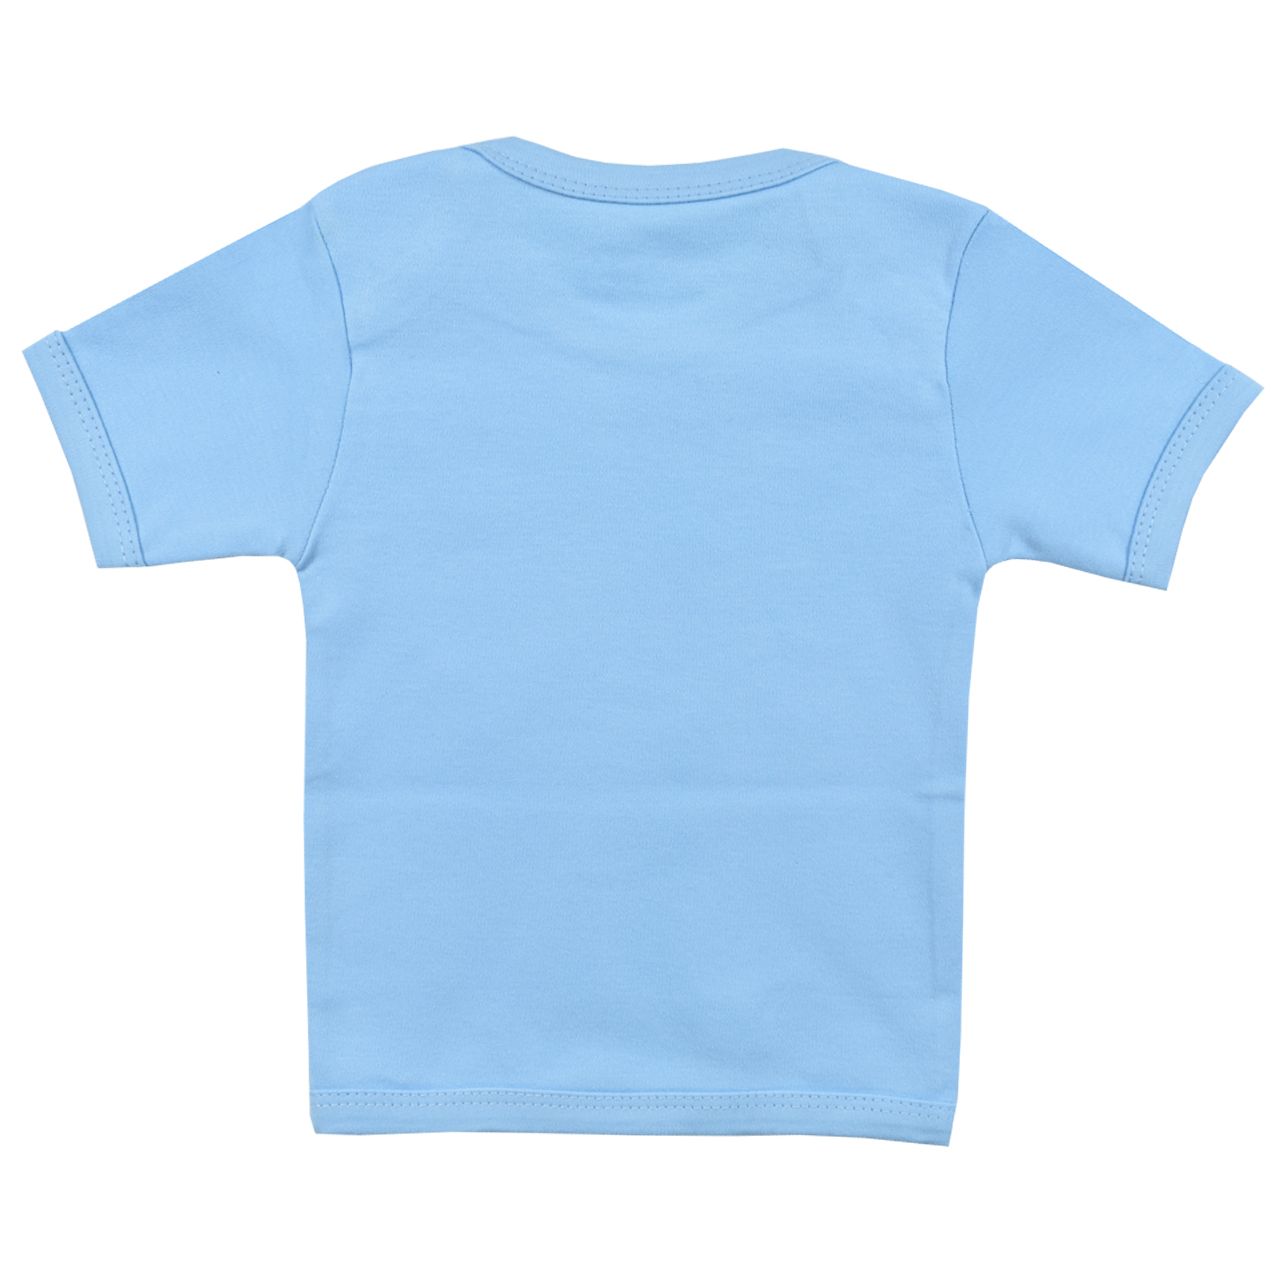 تی شرت آستین کوتاه نوزادی اسپیکو کد 300 -5 -  - 2